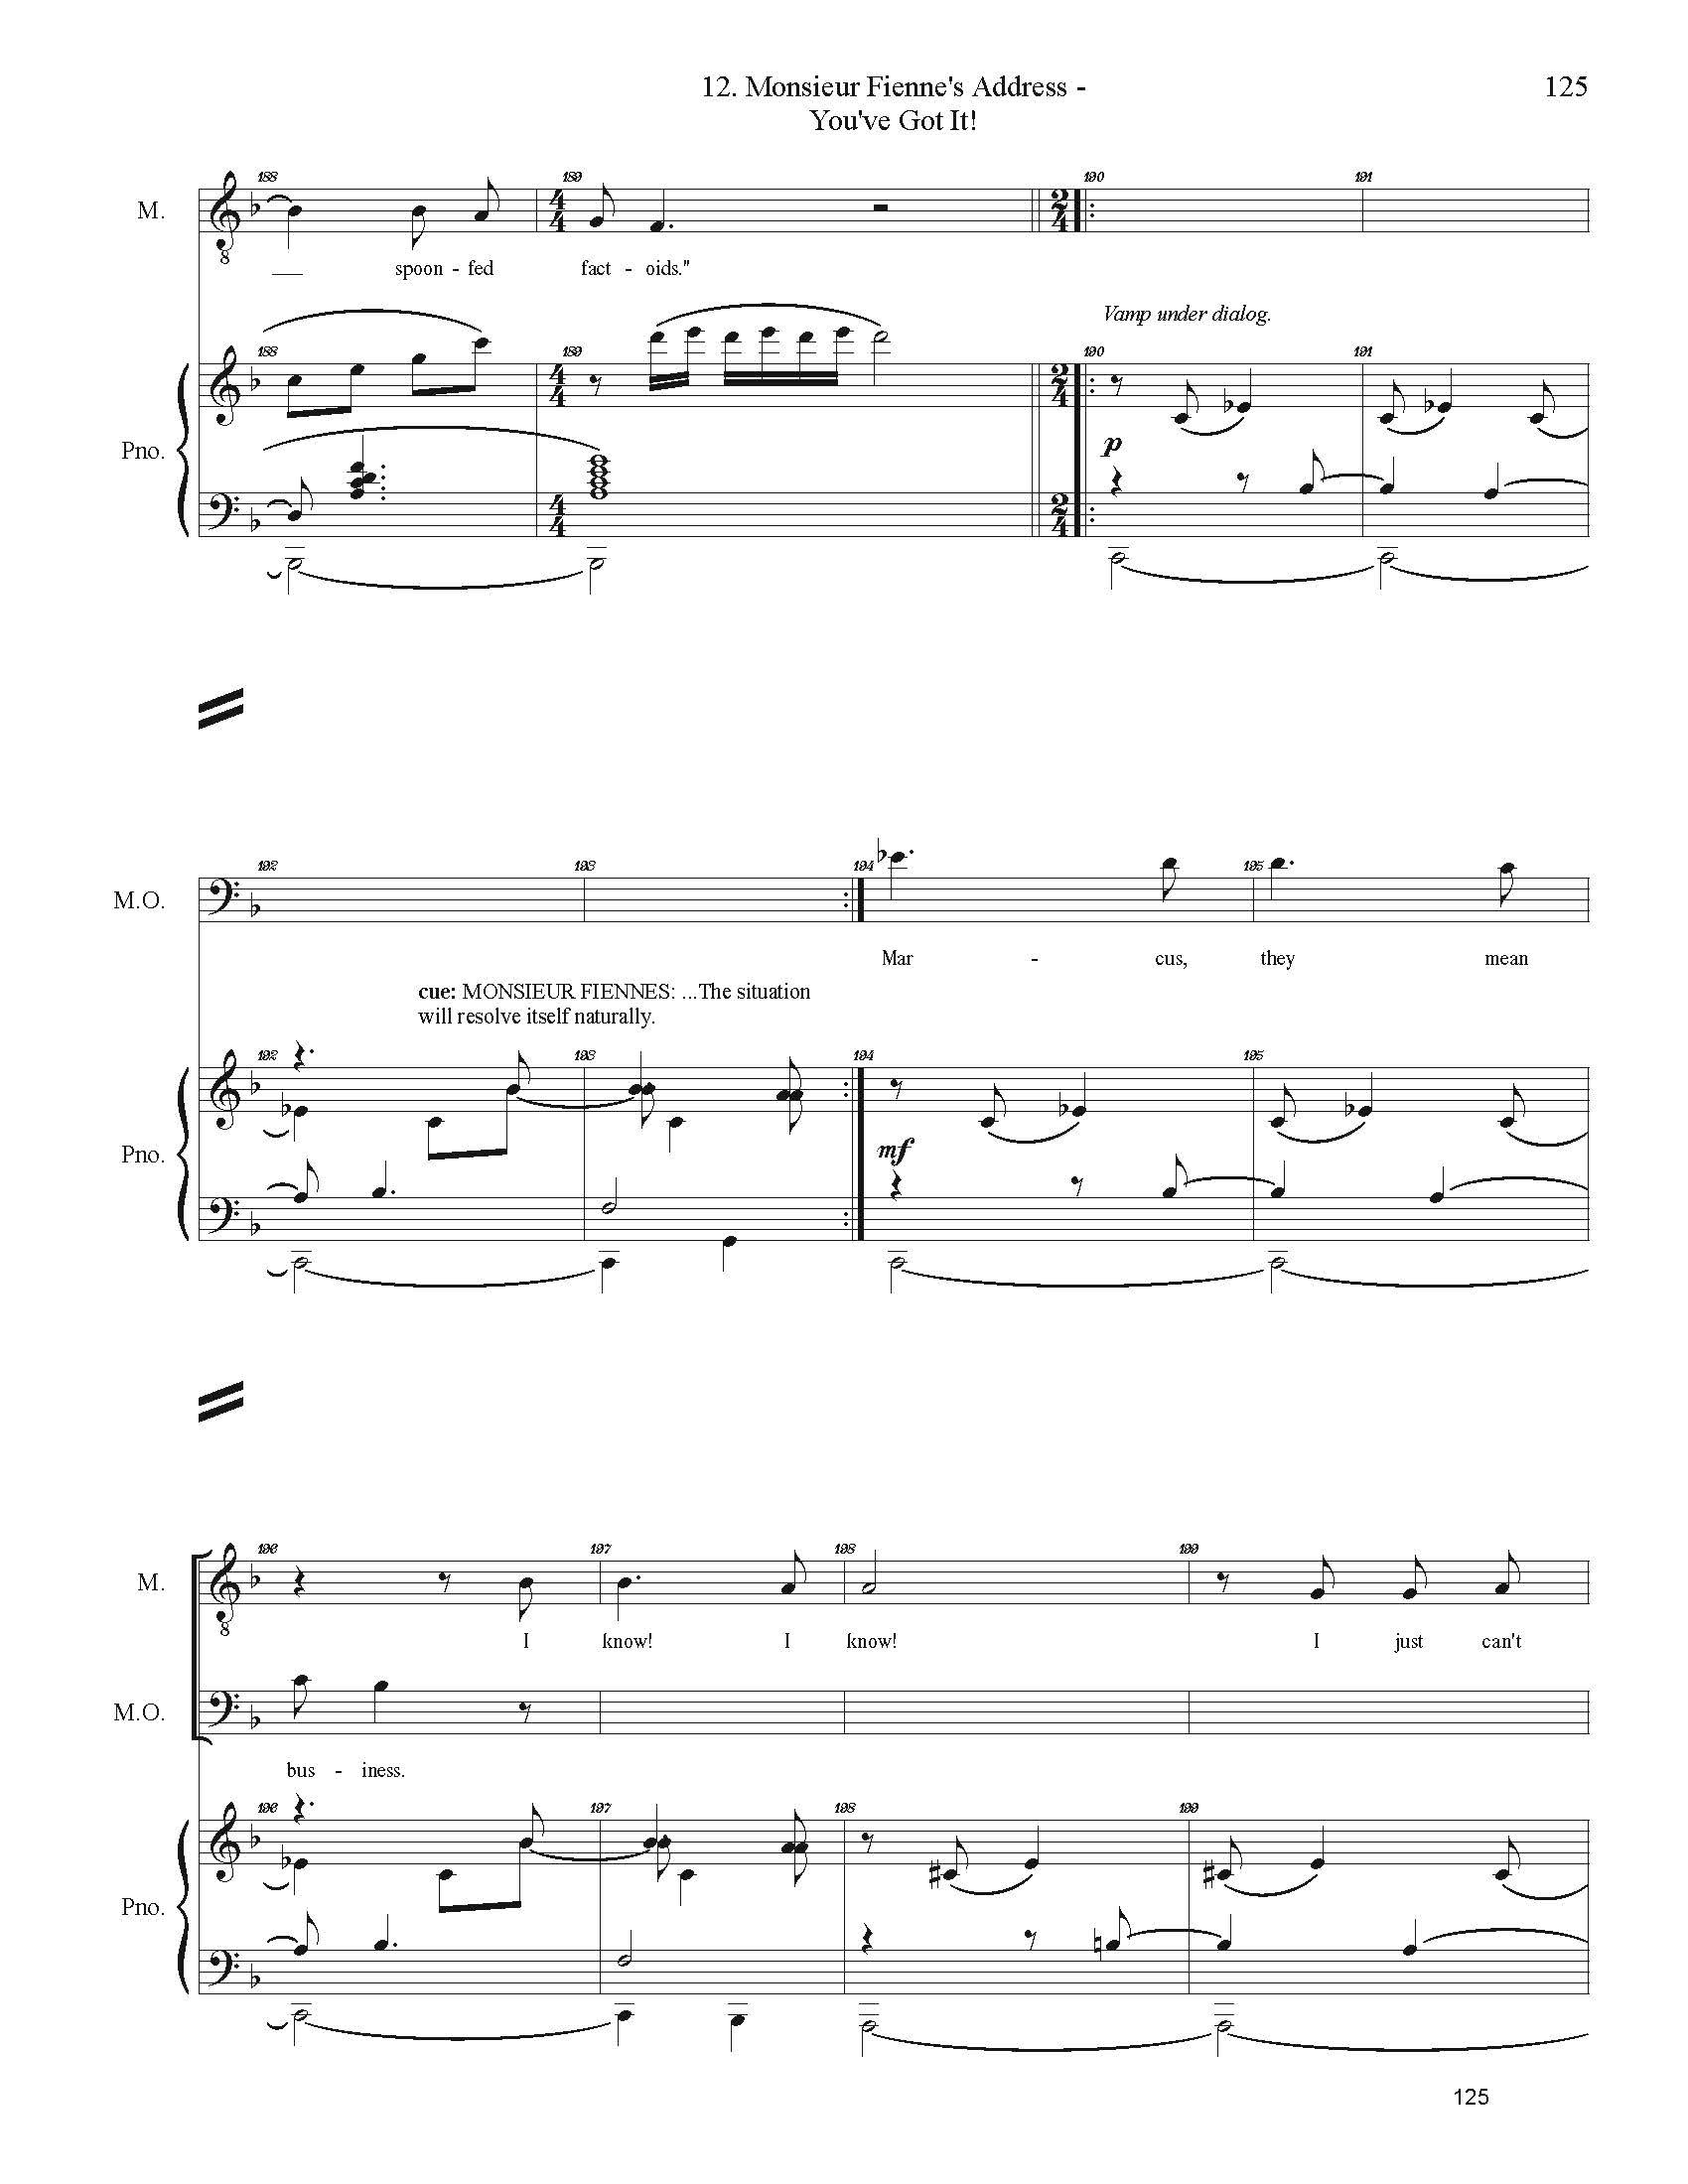 FULL PIANO VOCAL SCORE DRAFT 1 - Score_Page_125.jpg